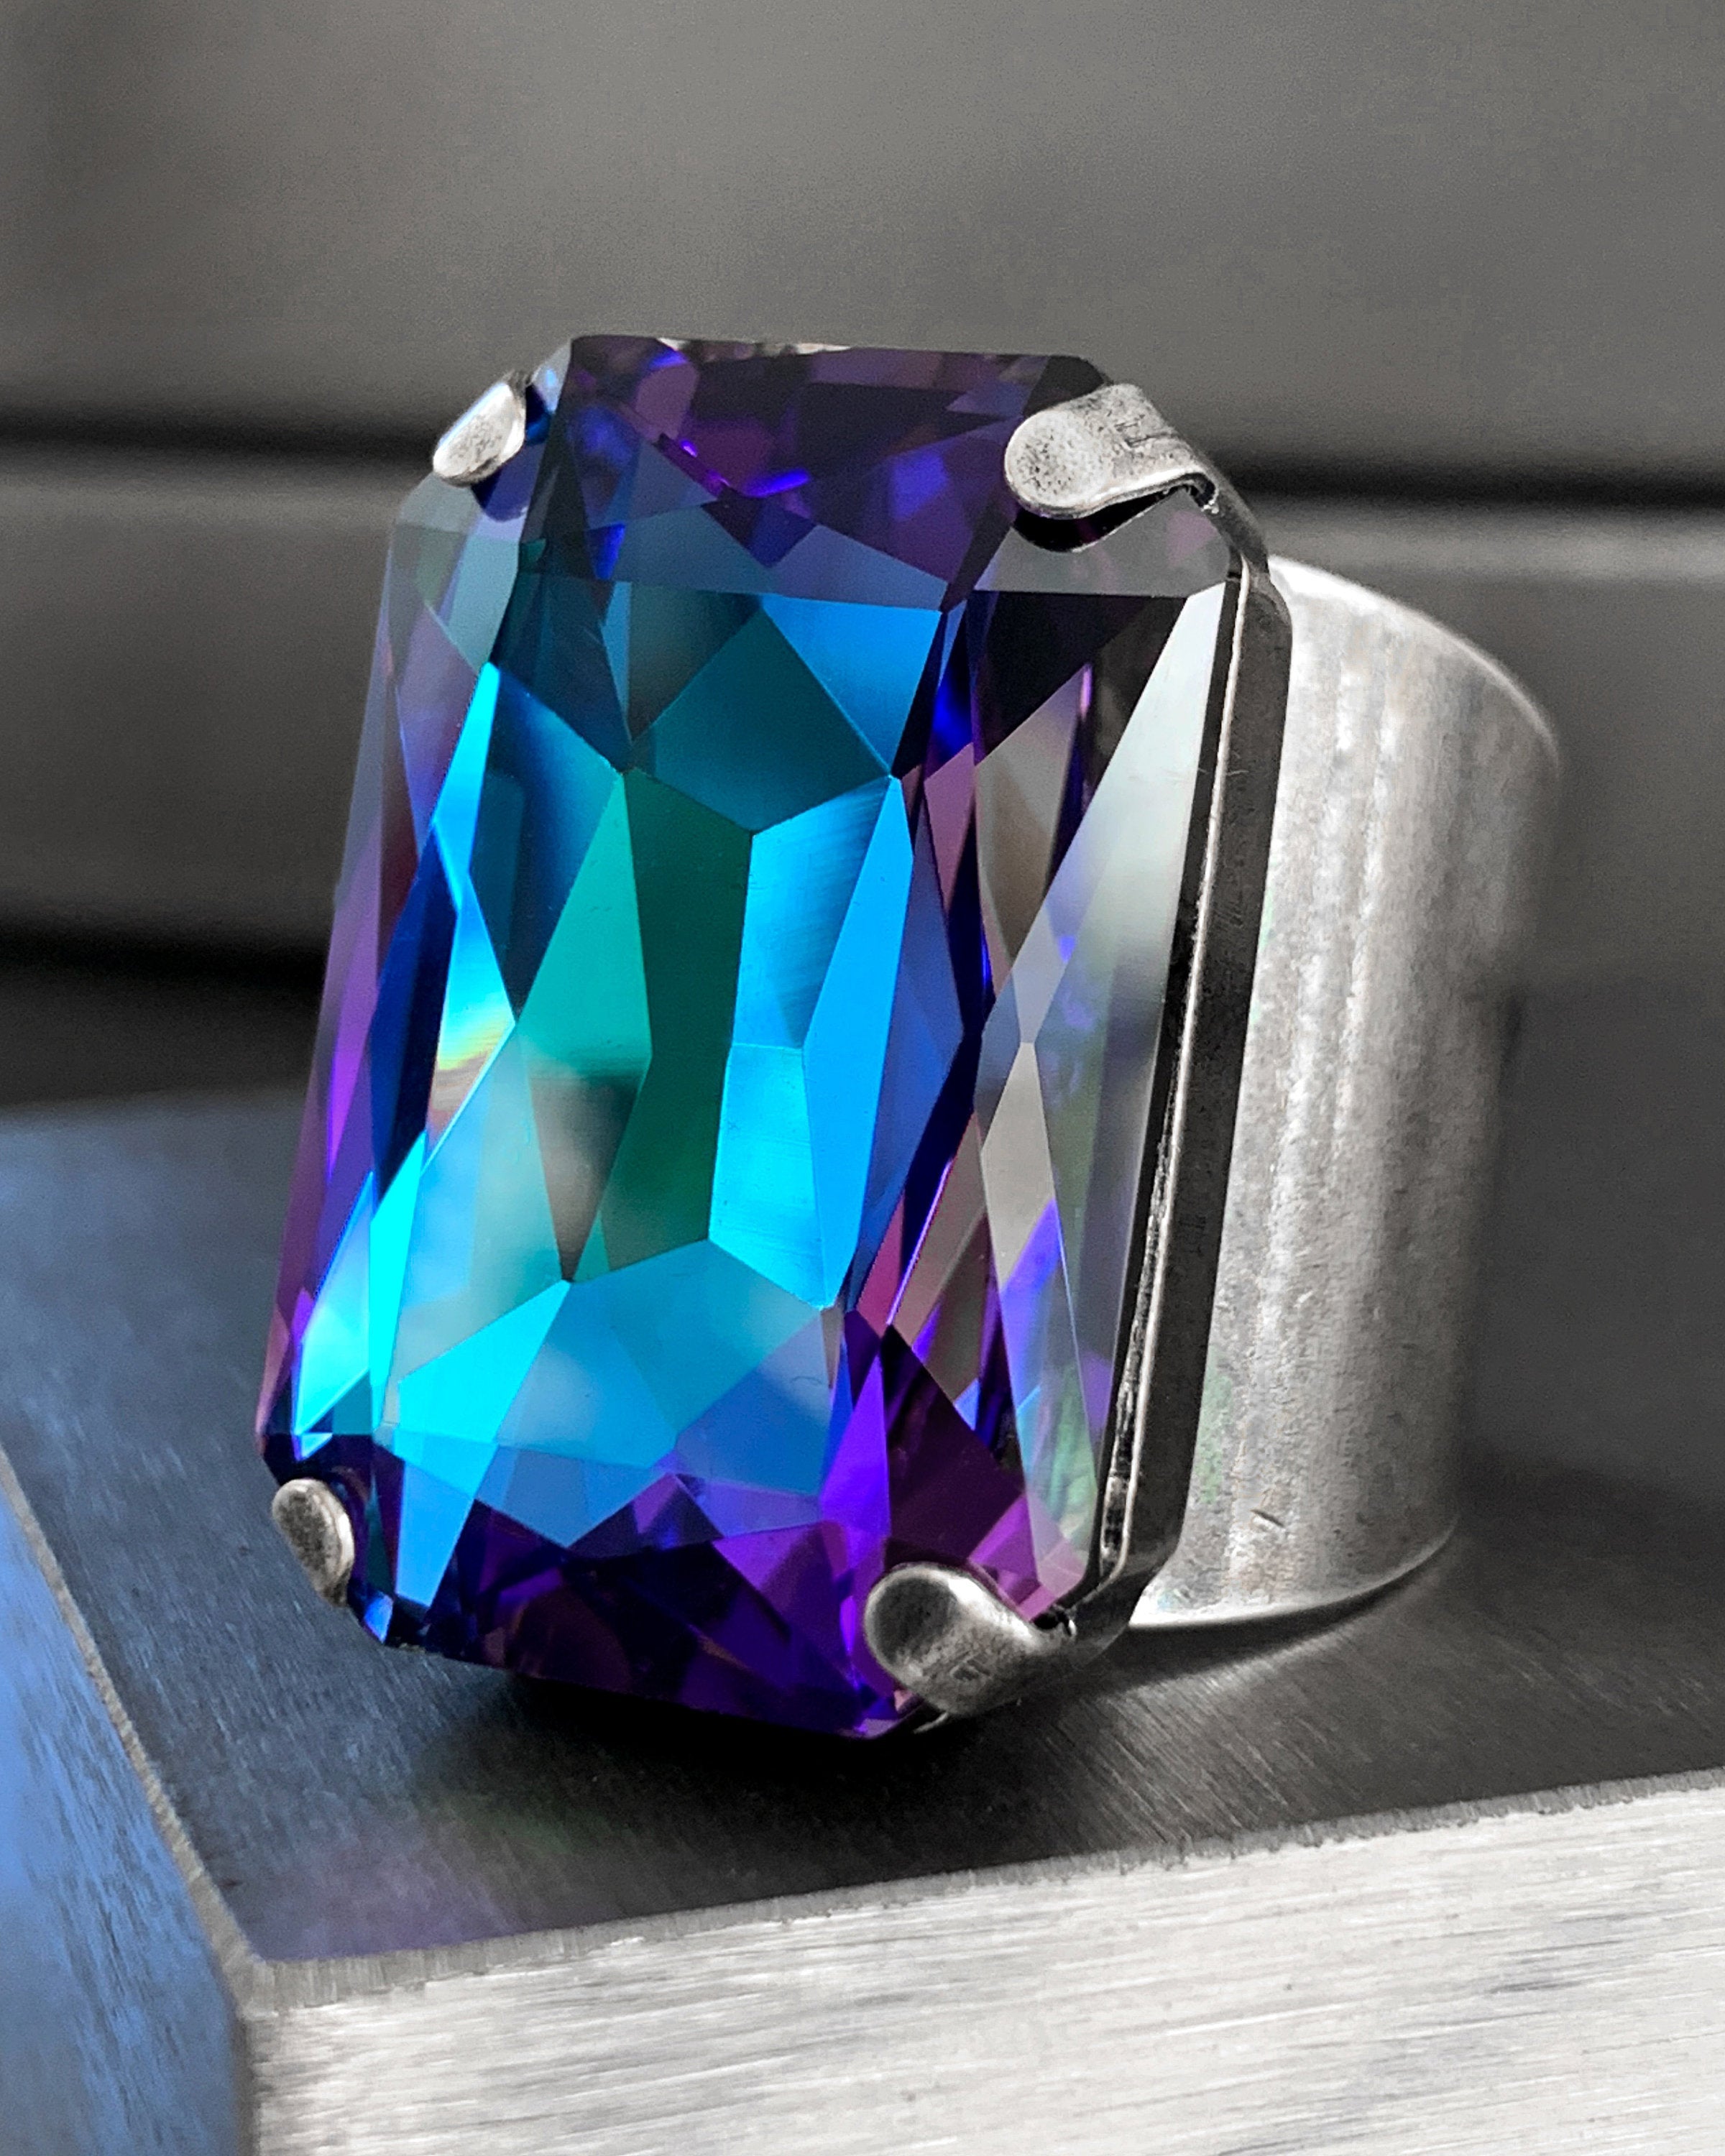 ILLUSION - Large Swarovski Crystal Crystal Ring in Heliotrope - Aqua, Blue, Violet Purple Crystal Ring - Unisex - LIMITED EDITION